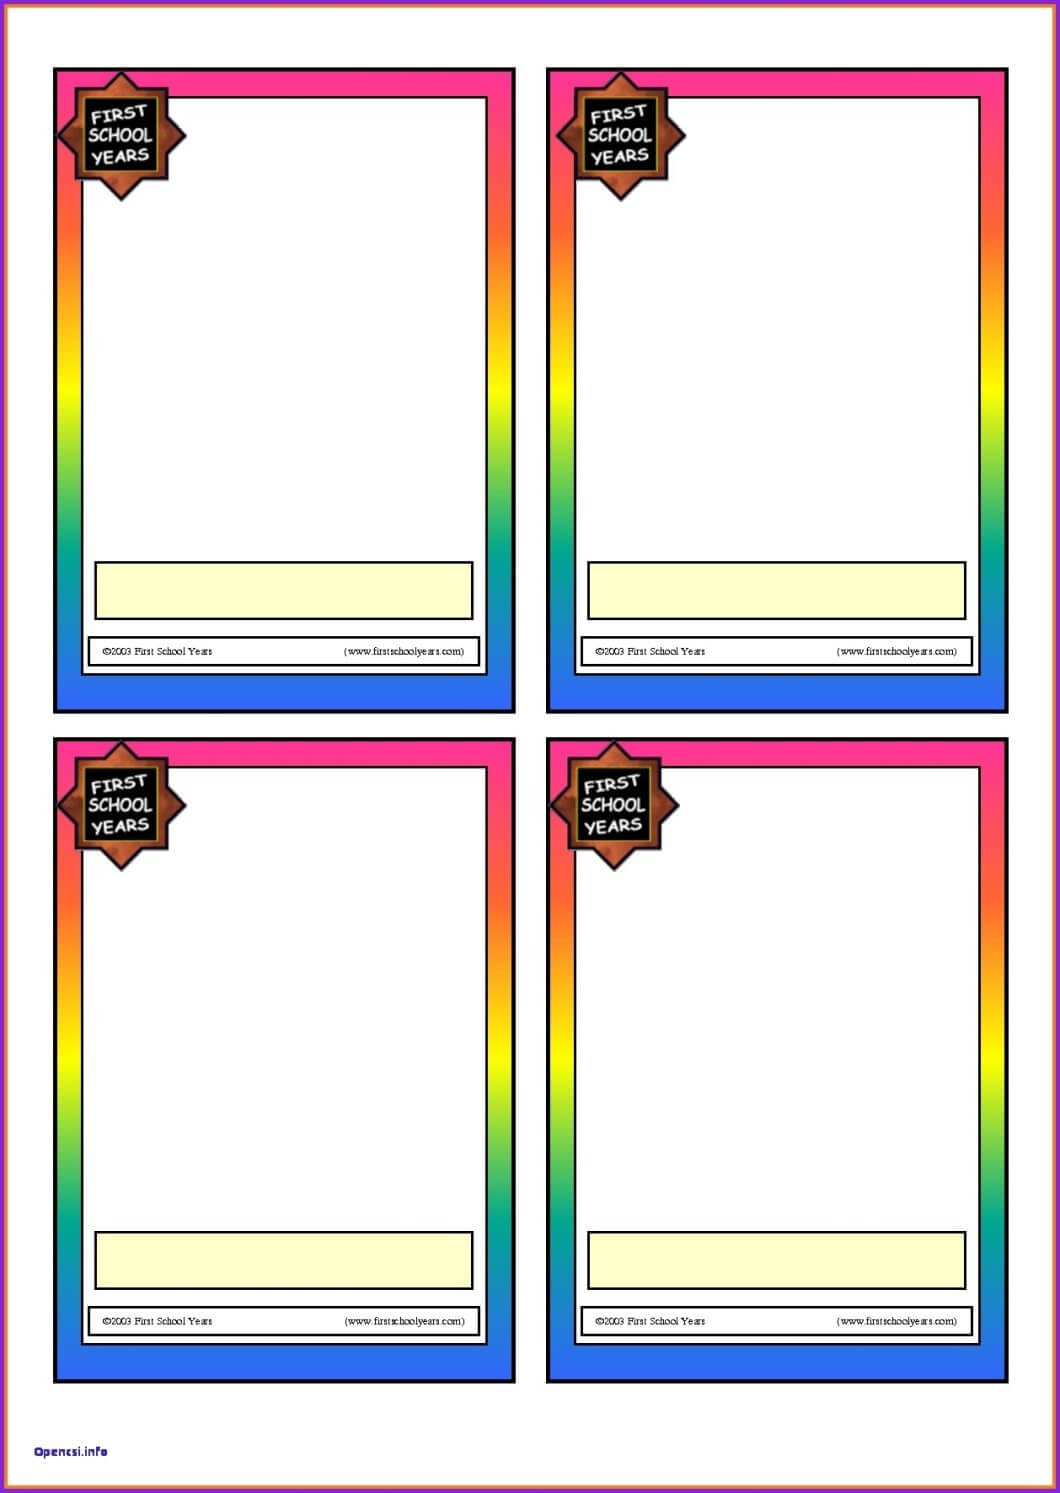 Printable Blank Flash Cards Cardjdi Org Flashcards With Regard To Free Printable Blank Flash Cards Template